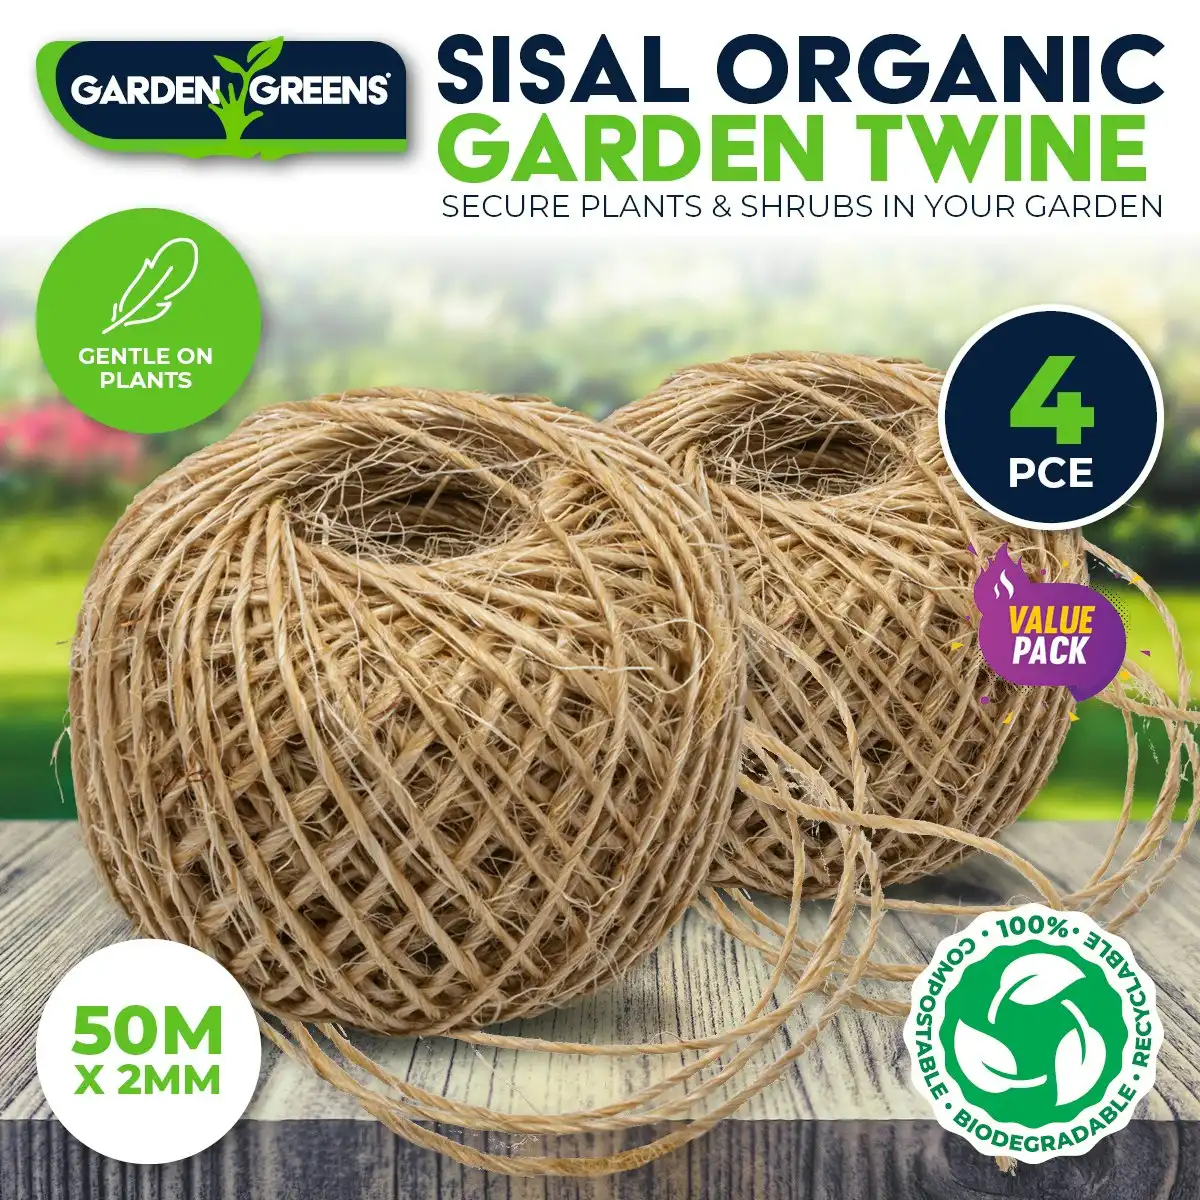 Garden Greens 4PCE Garden Twine Sisal Versatile Organic Gentle 50m x 2mm